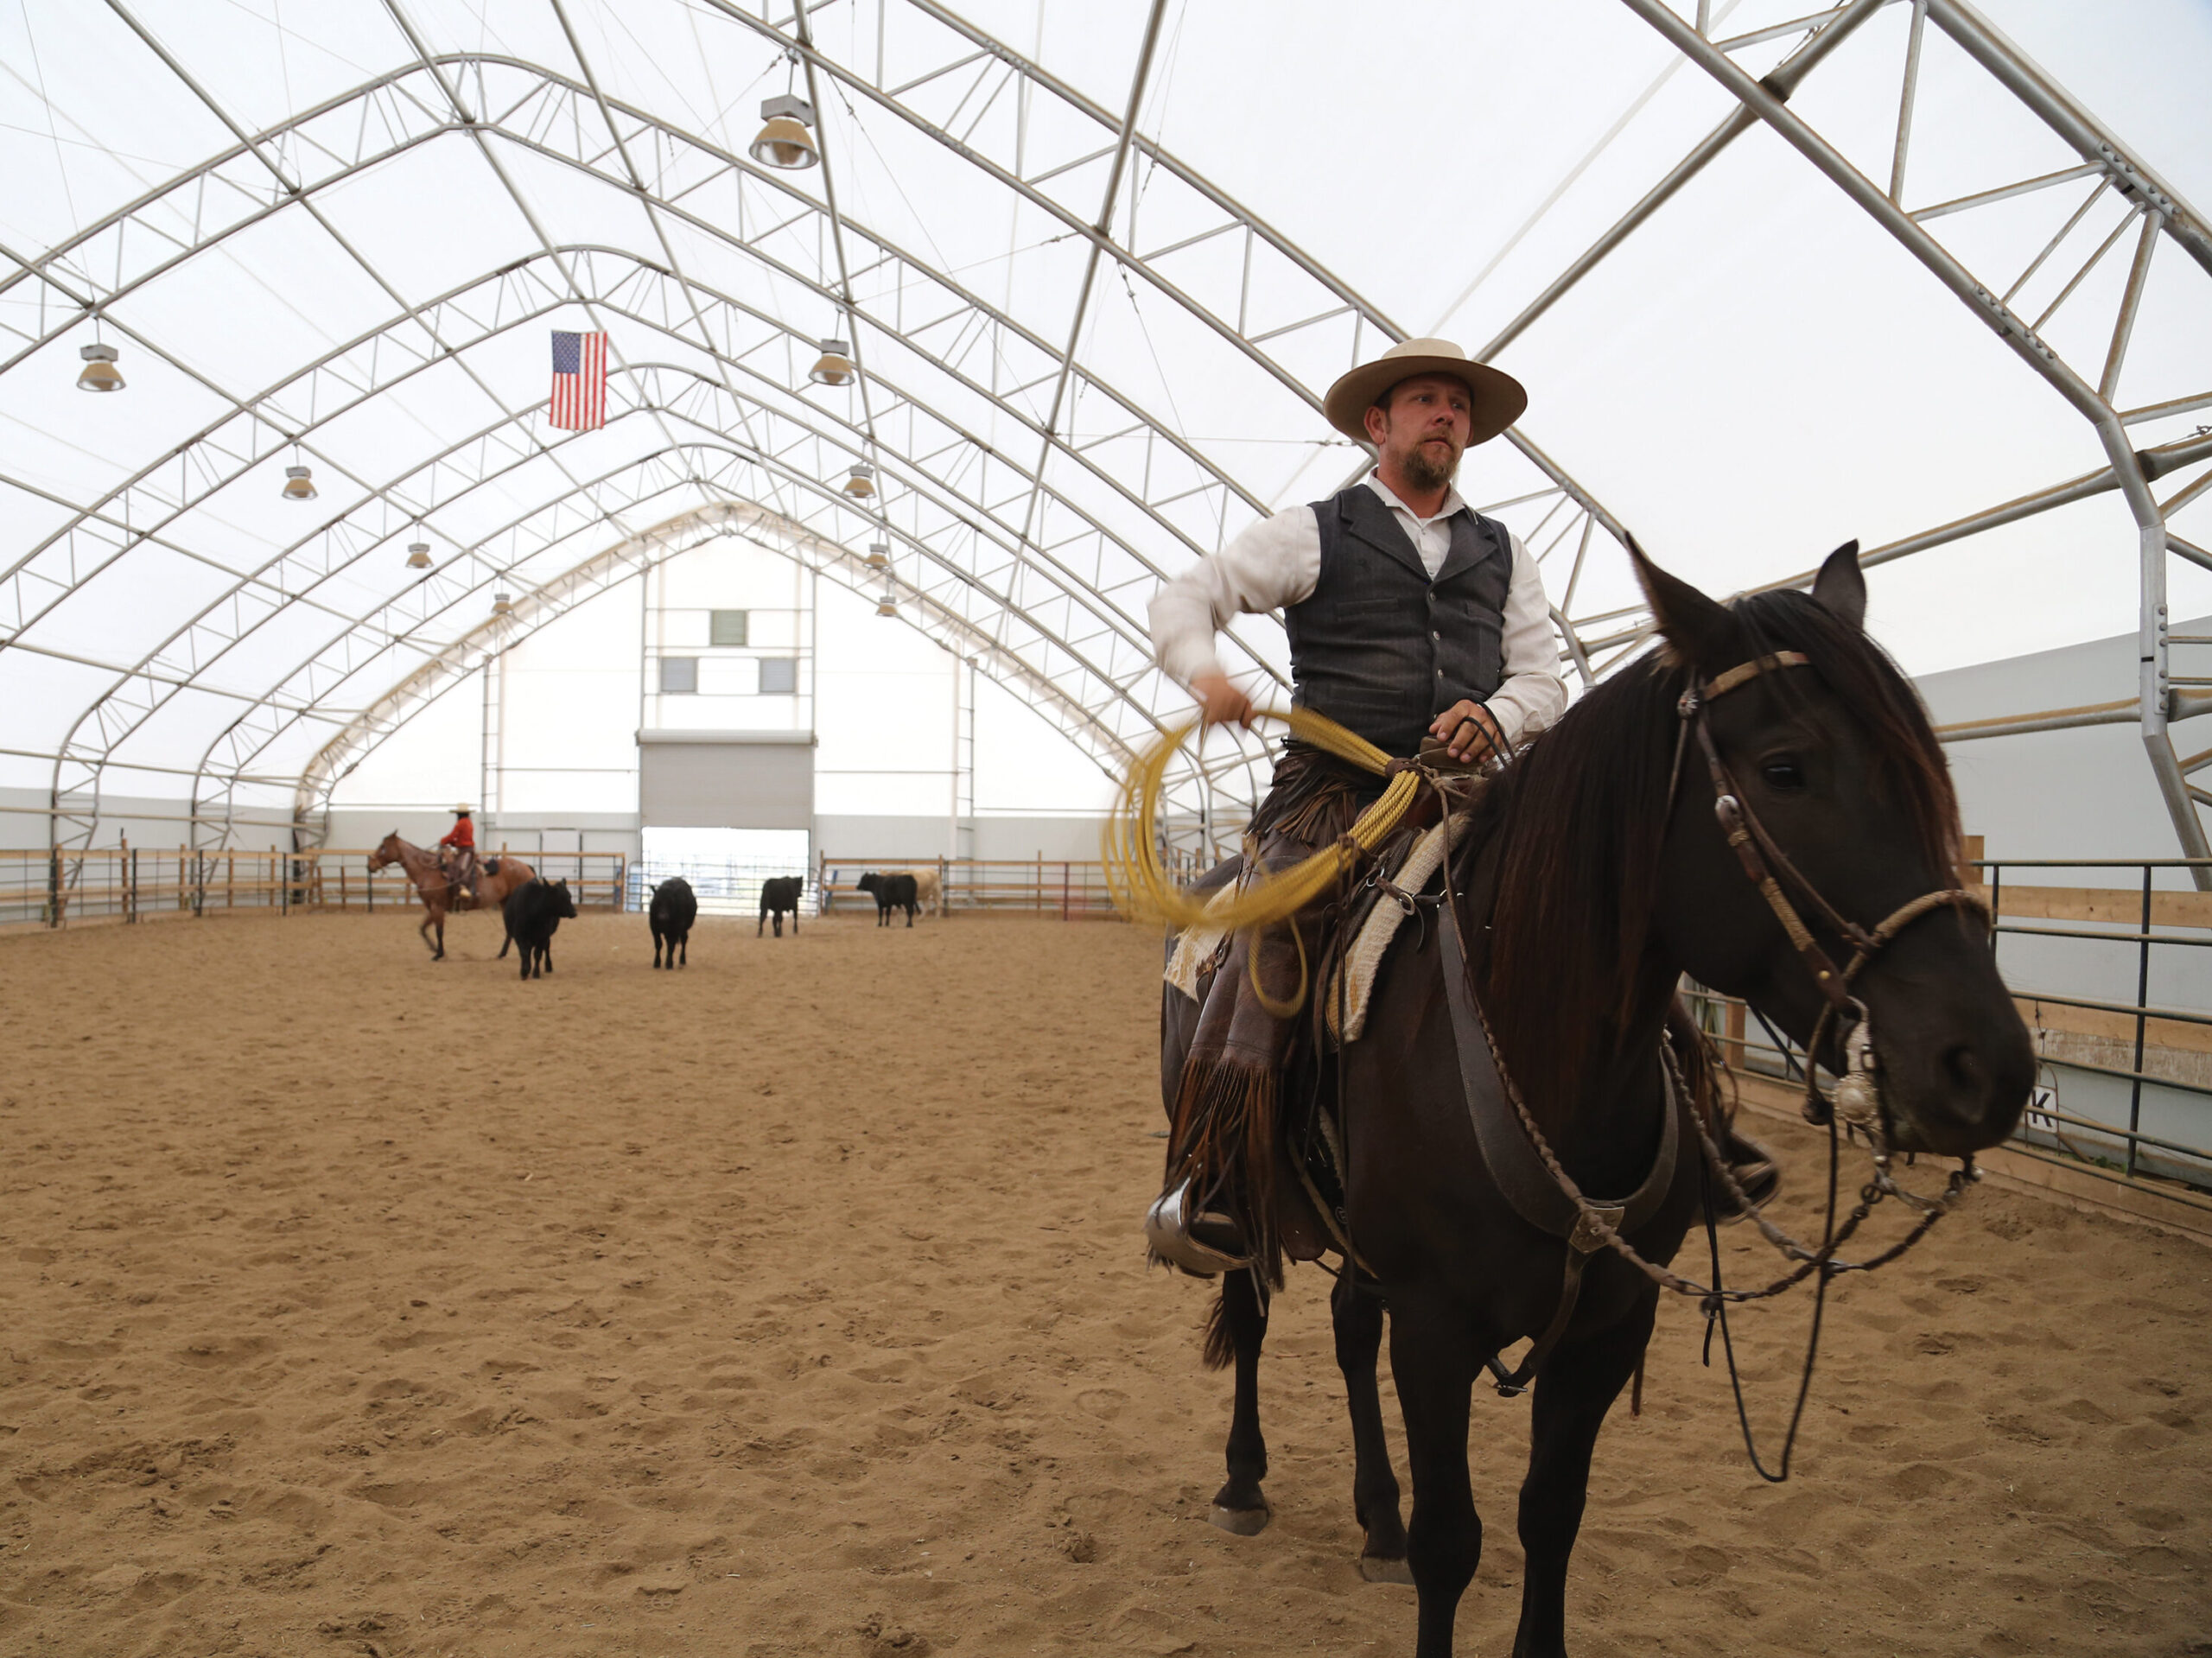 Equine Riding Arena in Colorado - Inside Photo